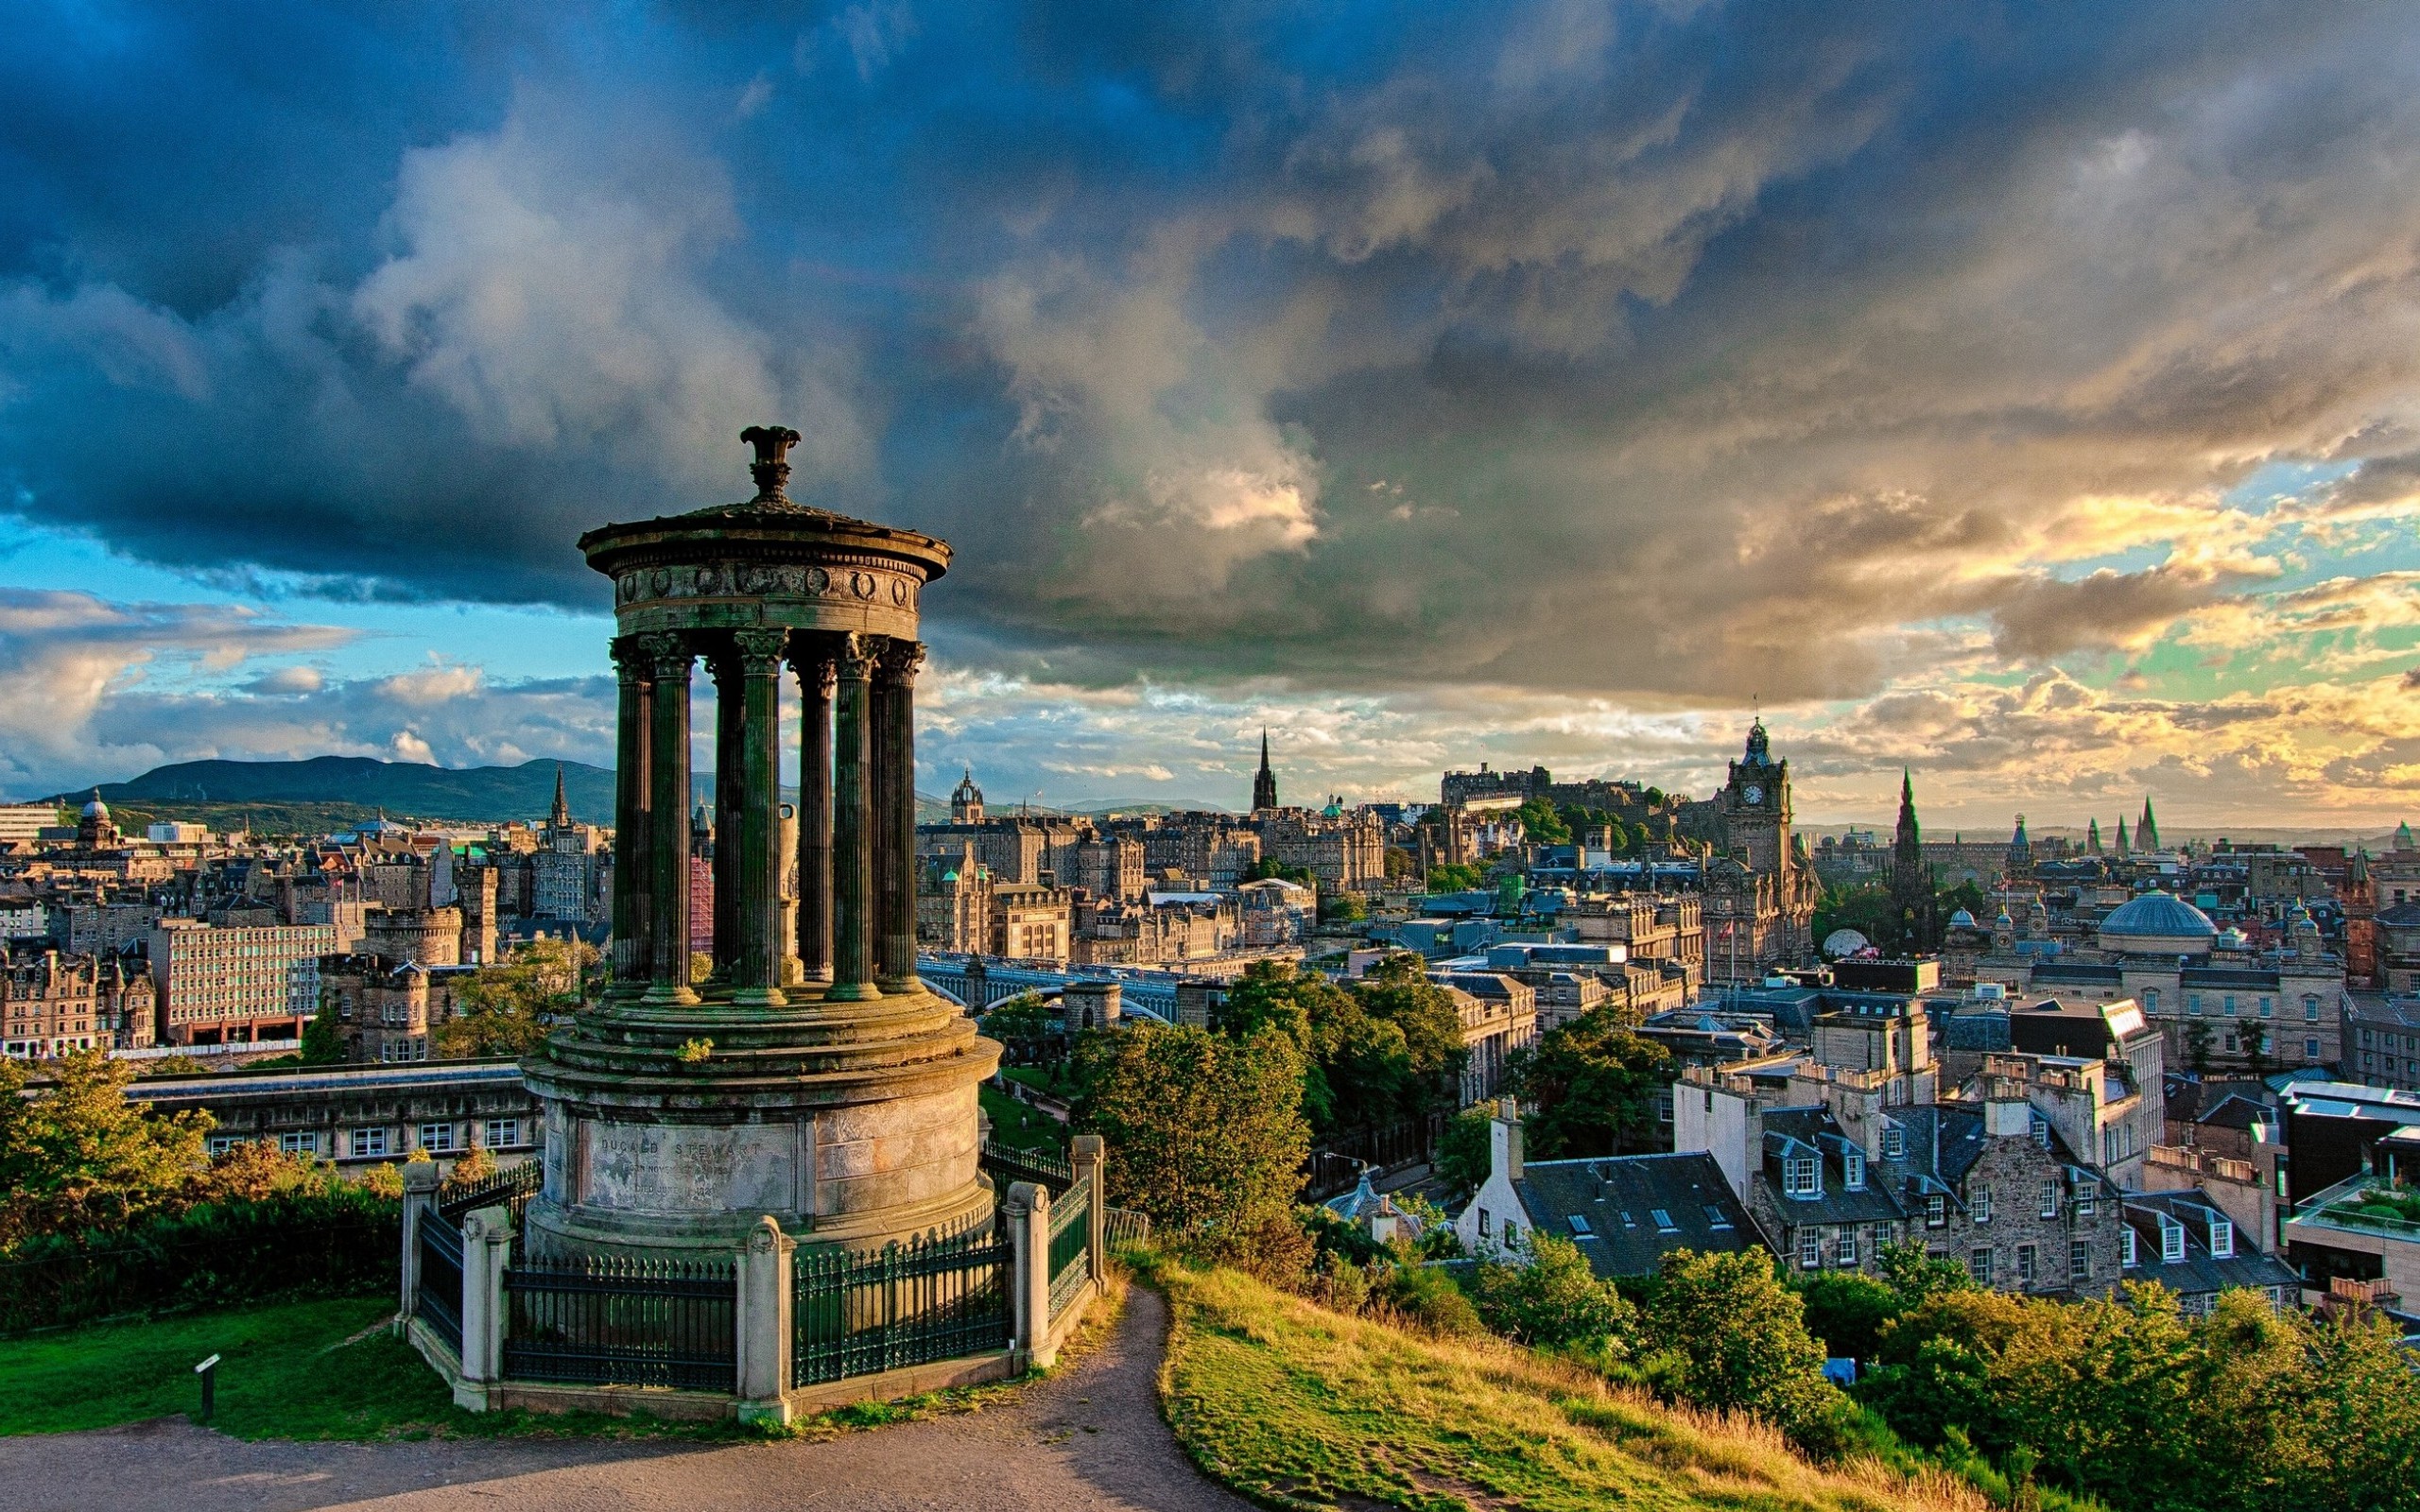 Edinburgh Full HD Wallpaper and Background Image | 2560x1600 | ID:540246